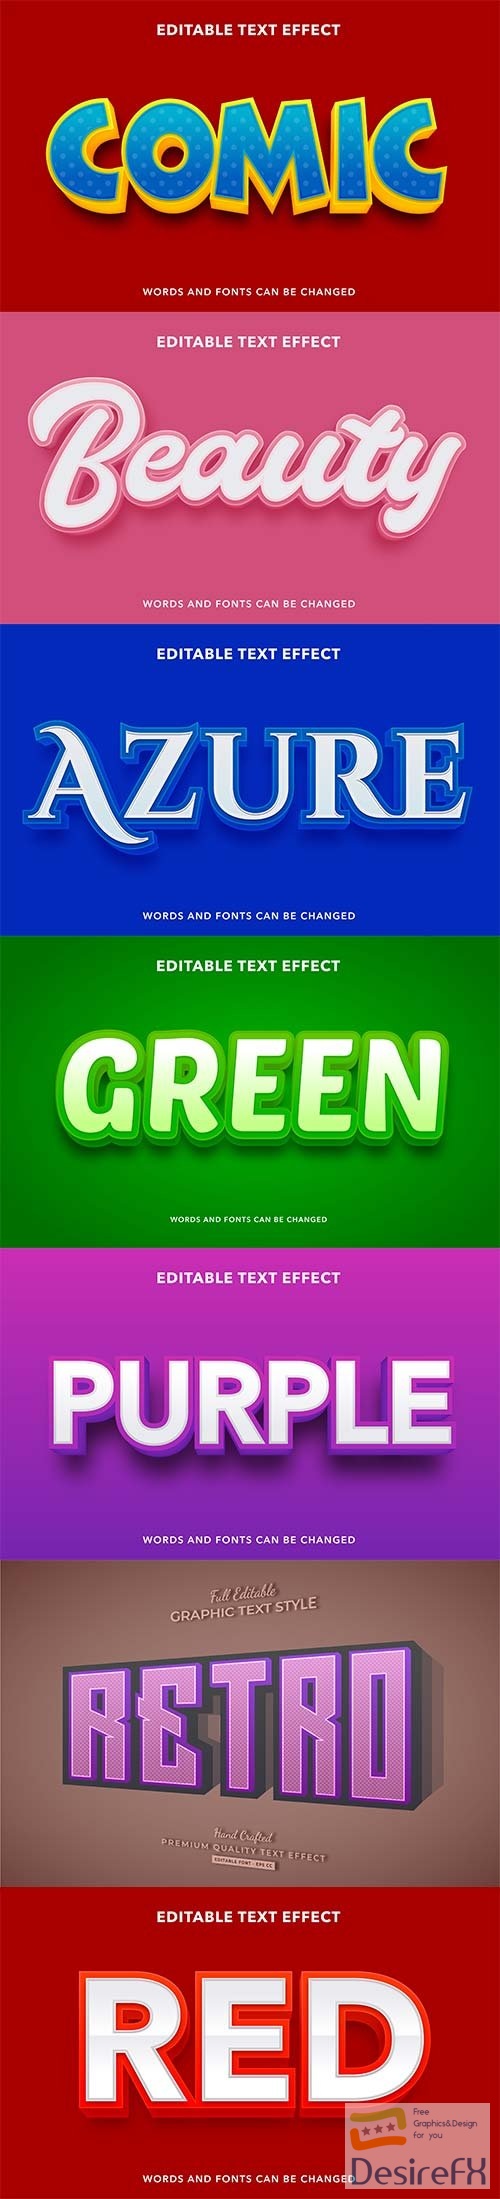 3d editable text style effect vector vol 247